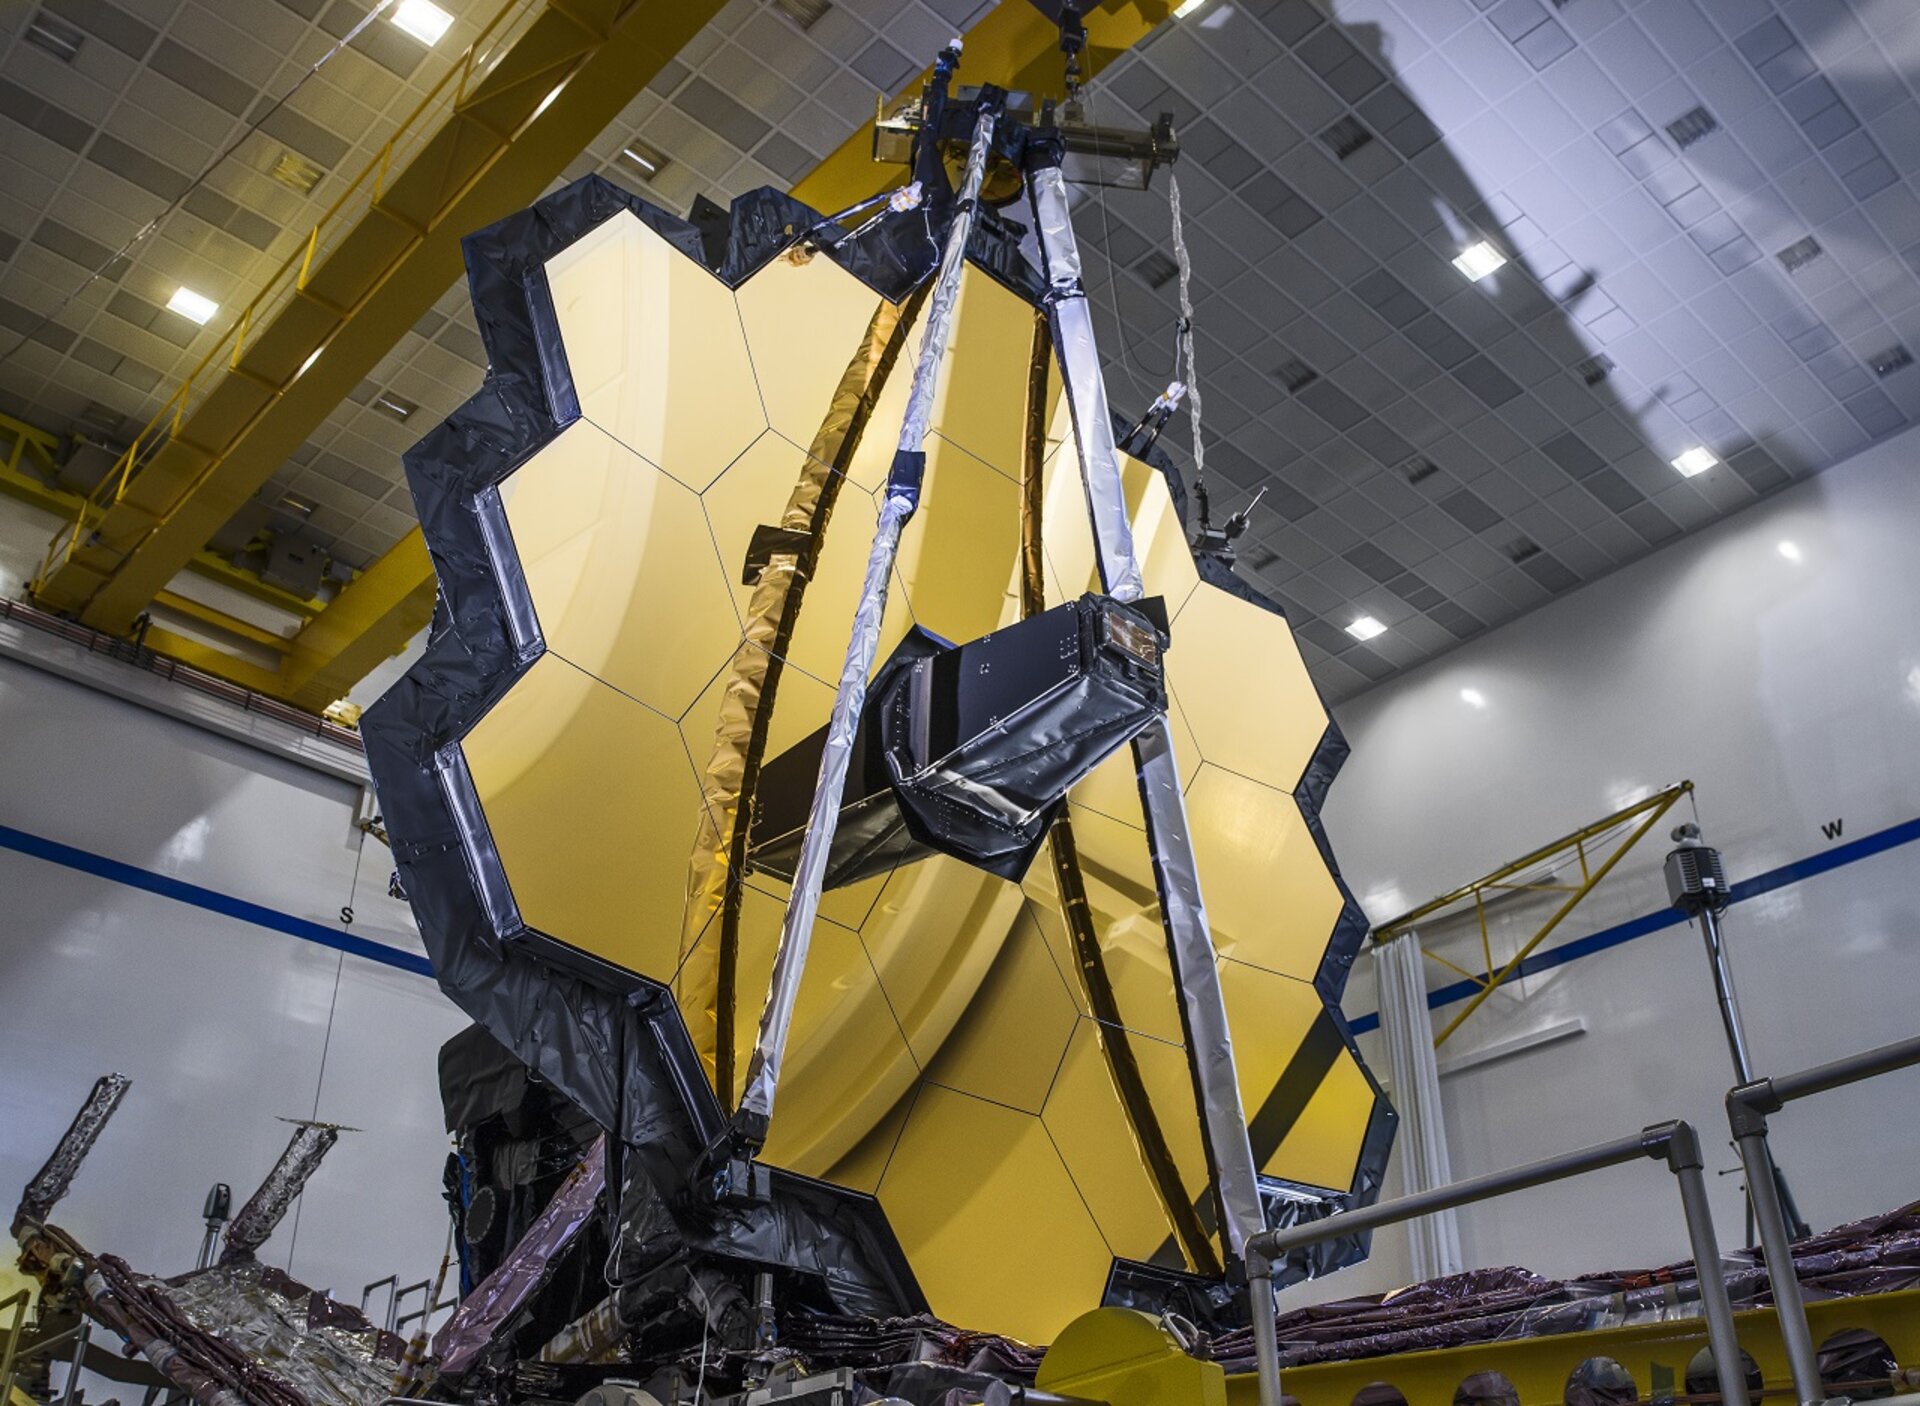 Deployment test of James Webb Space Telescope's primary mirror 